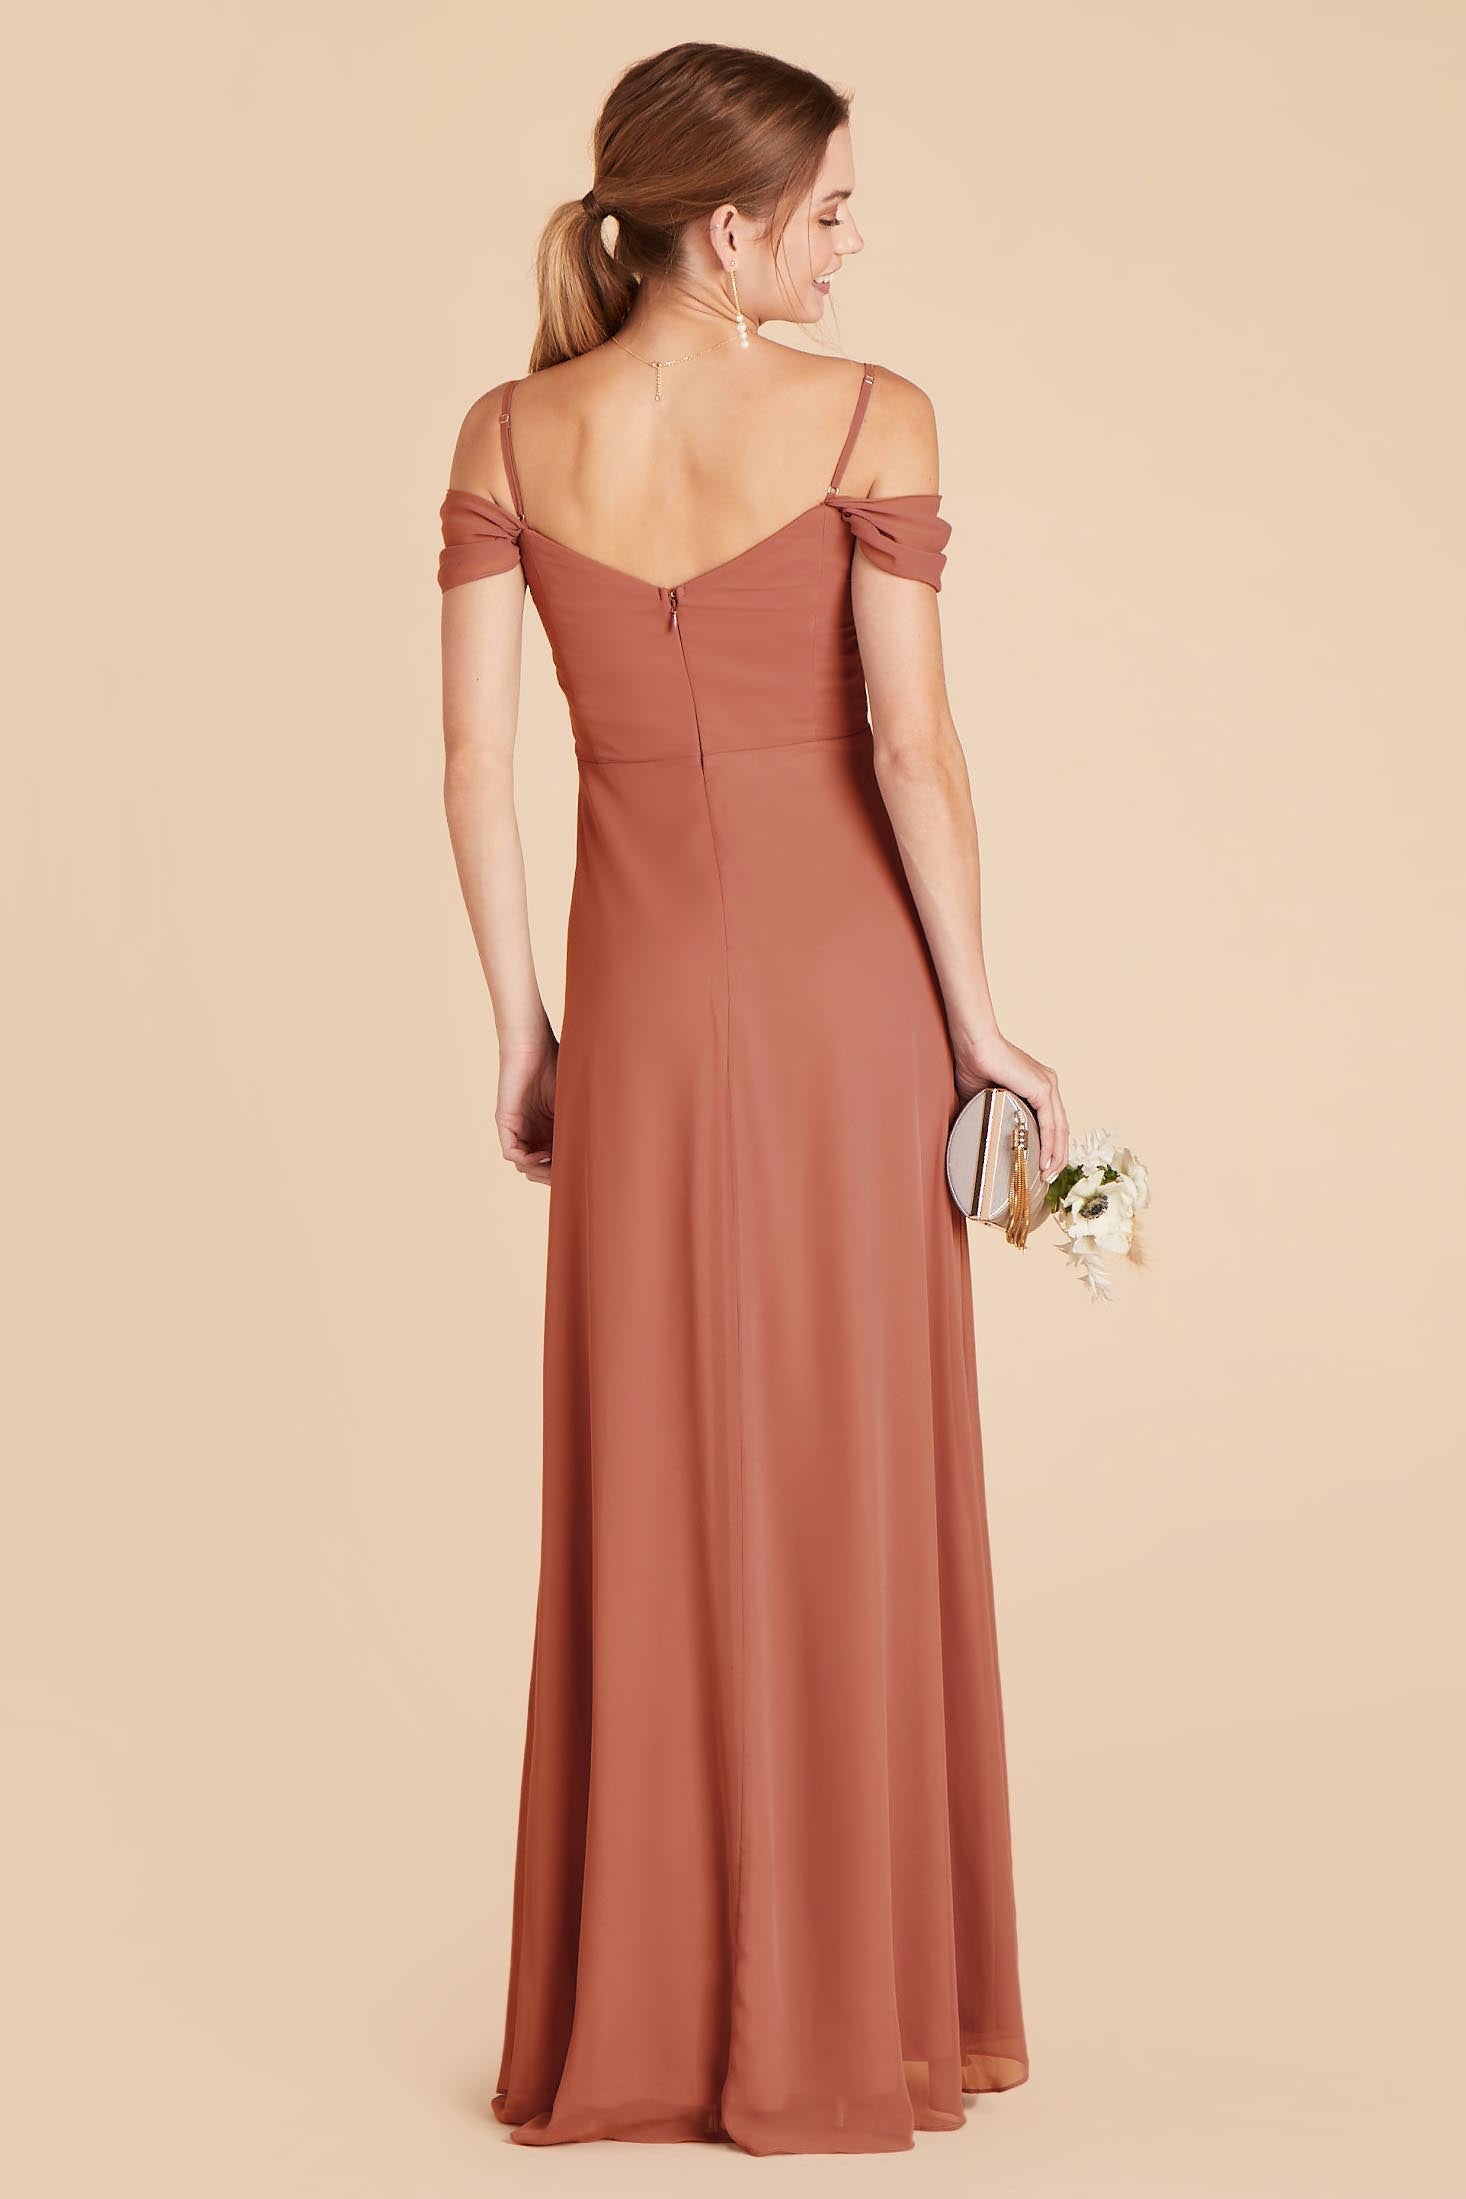 Terracotta Spence Convertible Dress by Birdy Grey